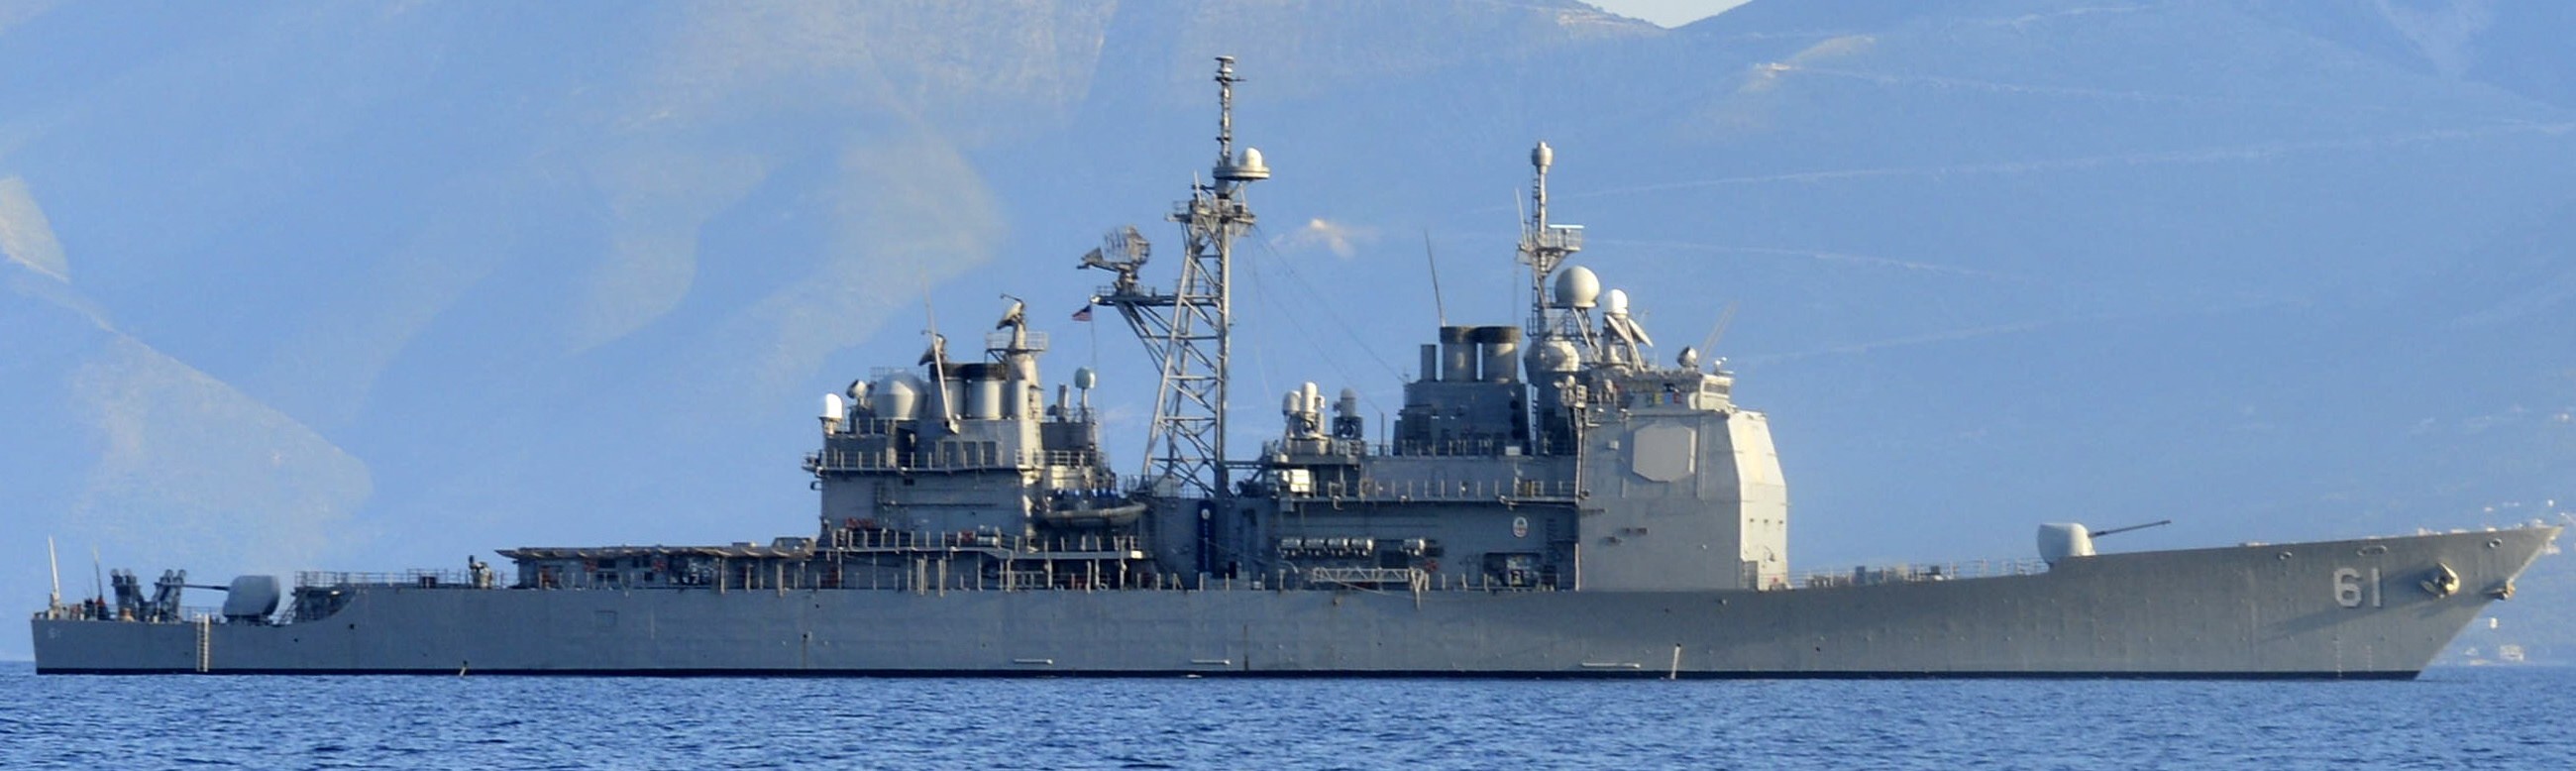 cg-61 uss monterey ticonderoga class guided missile cruiser aegis us navy porto palermo albania 41